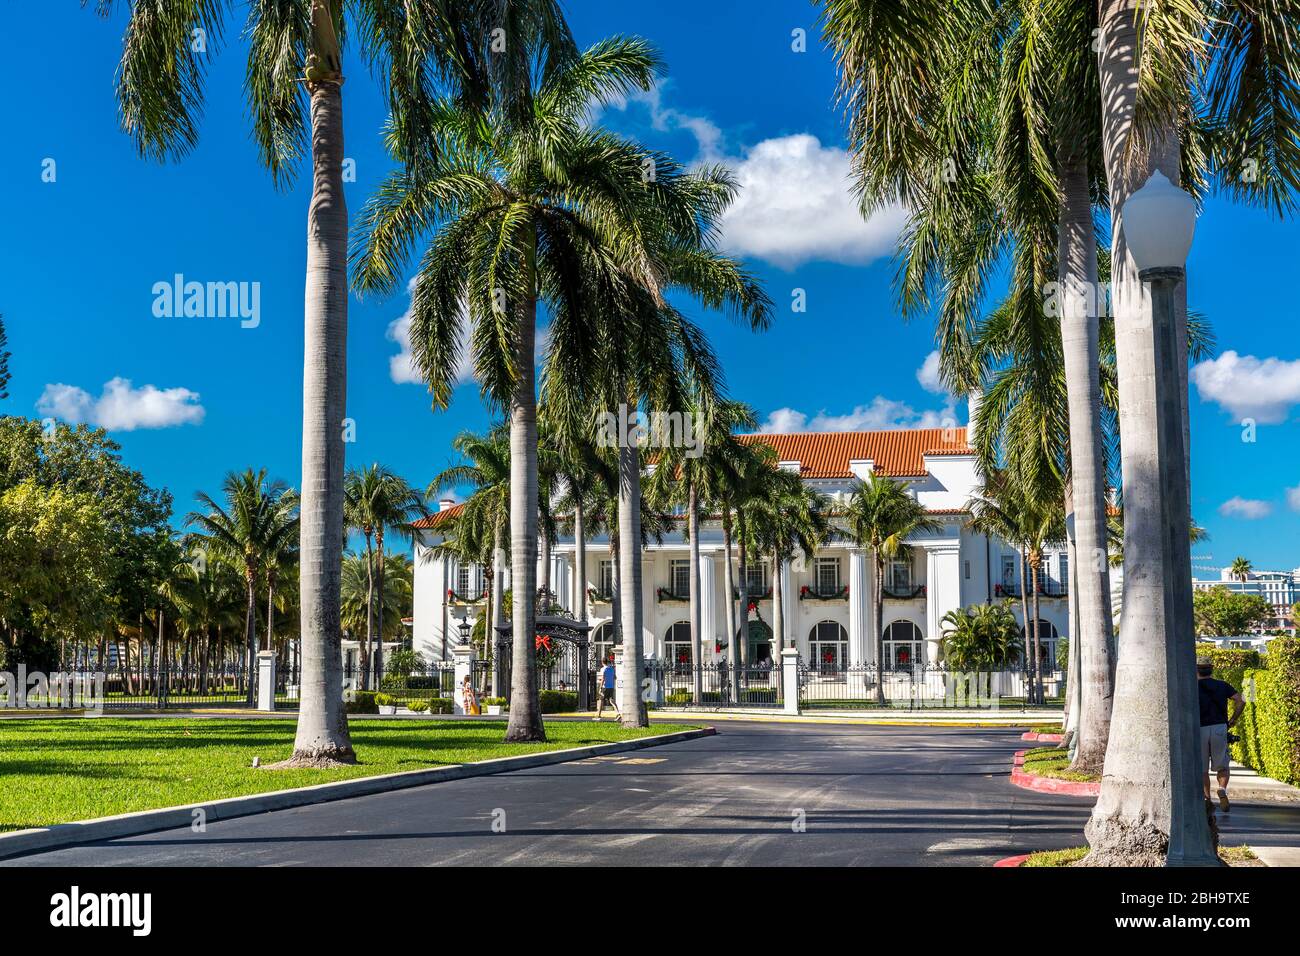 Whitehall, Henry Morrison Flagler Museum, vergoldete Altersvilla, erbaut 1902, Palm Beach, Palm Beach County, Florida, USA, Nordamerika Stockfoto